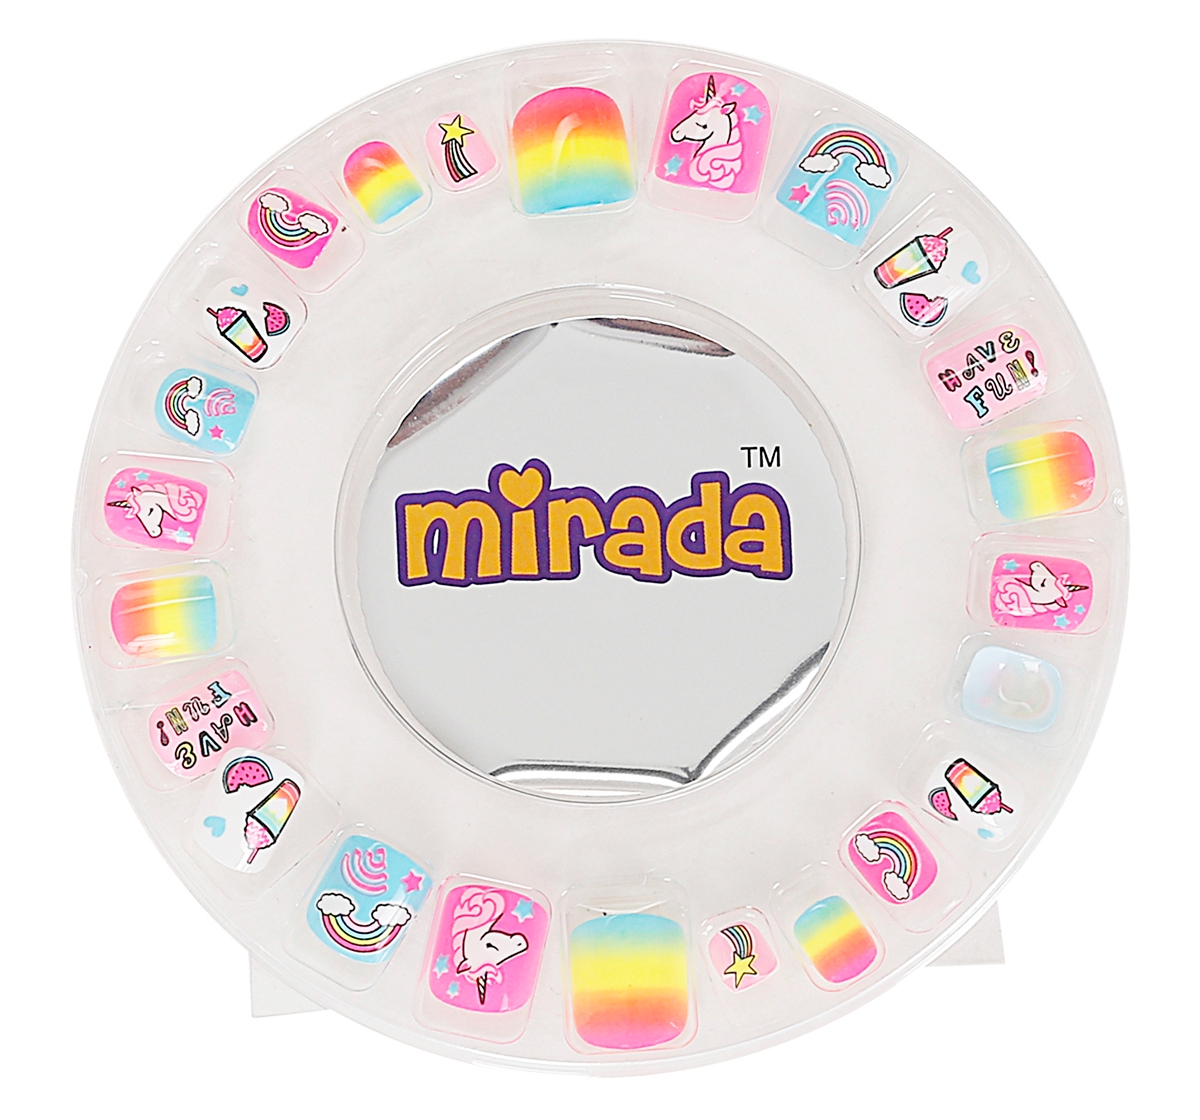 Mirada | Mirada Metallic Hair And Nail Studio Puzzle Multicolour 6Y+